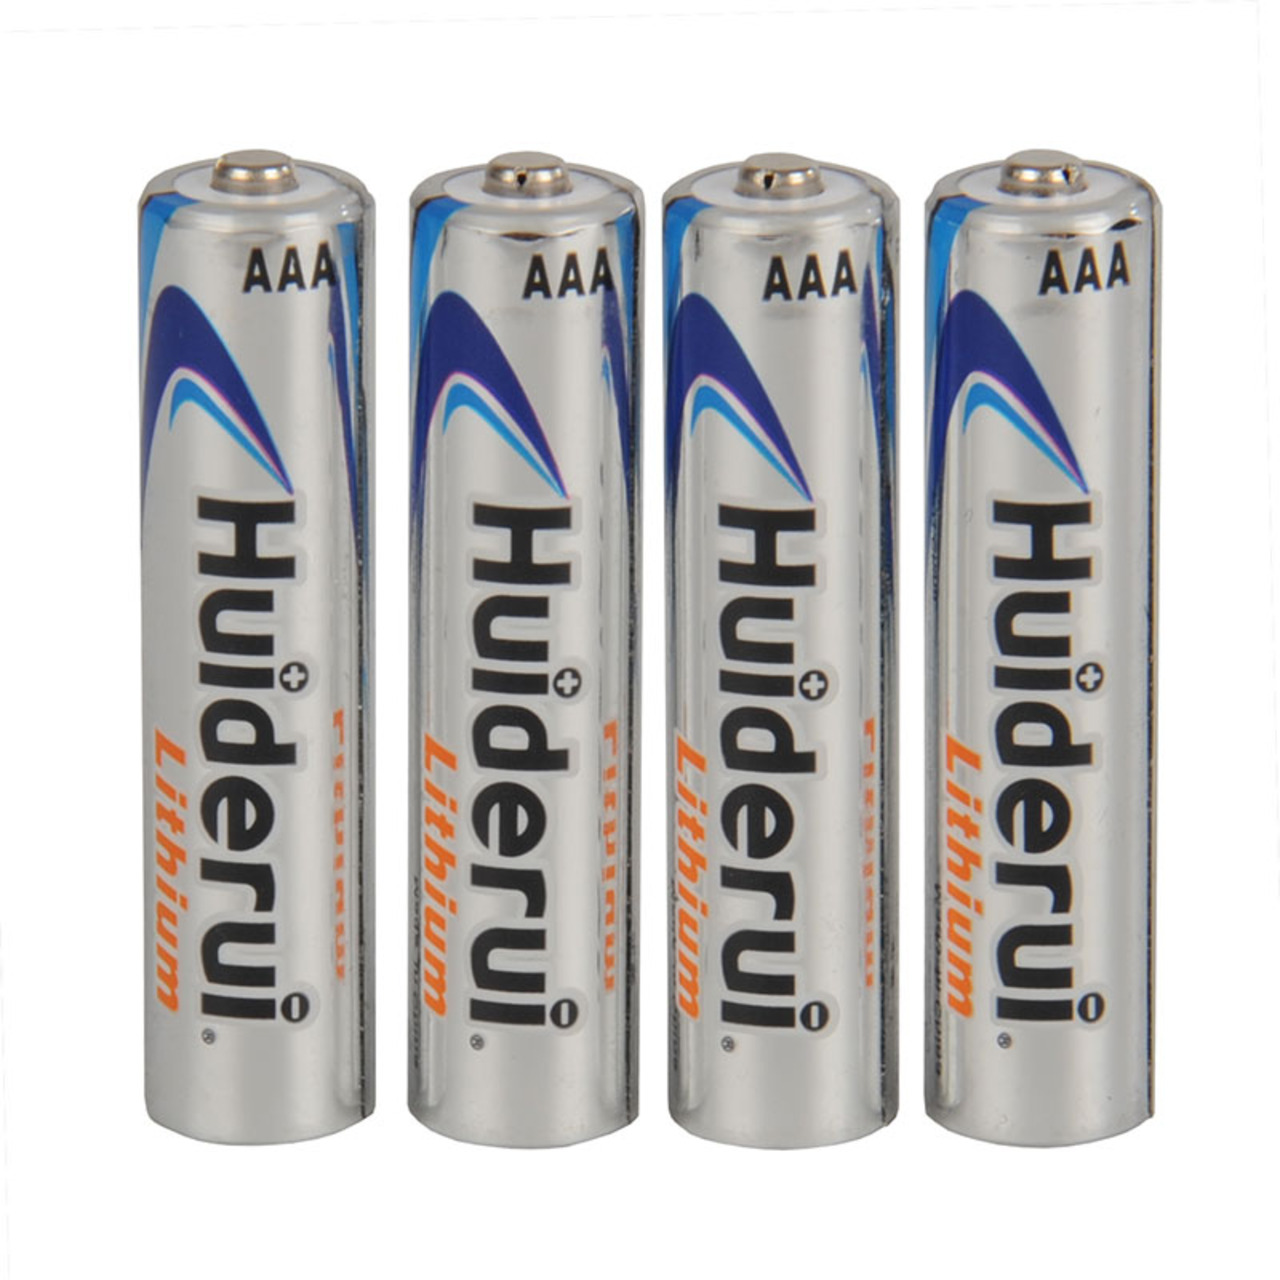 Huiderui Lithium Batterie Micro AAA- 4er-Pack